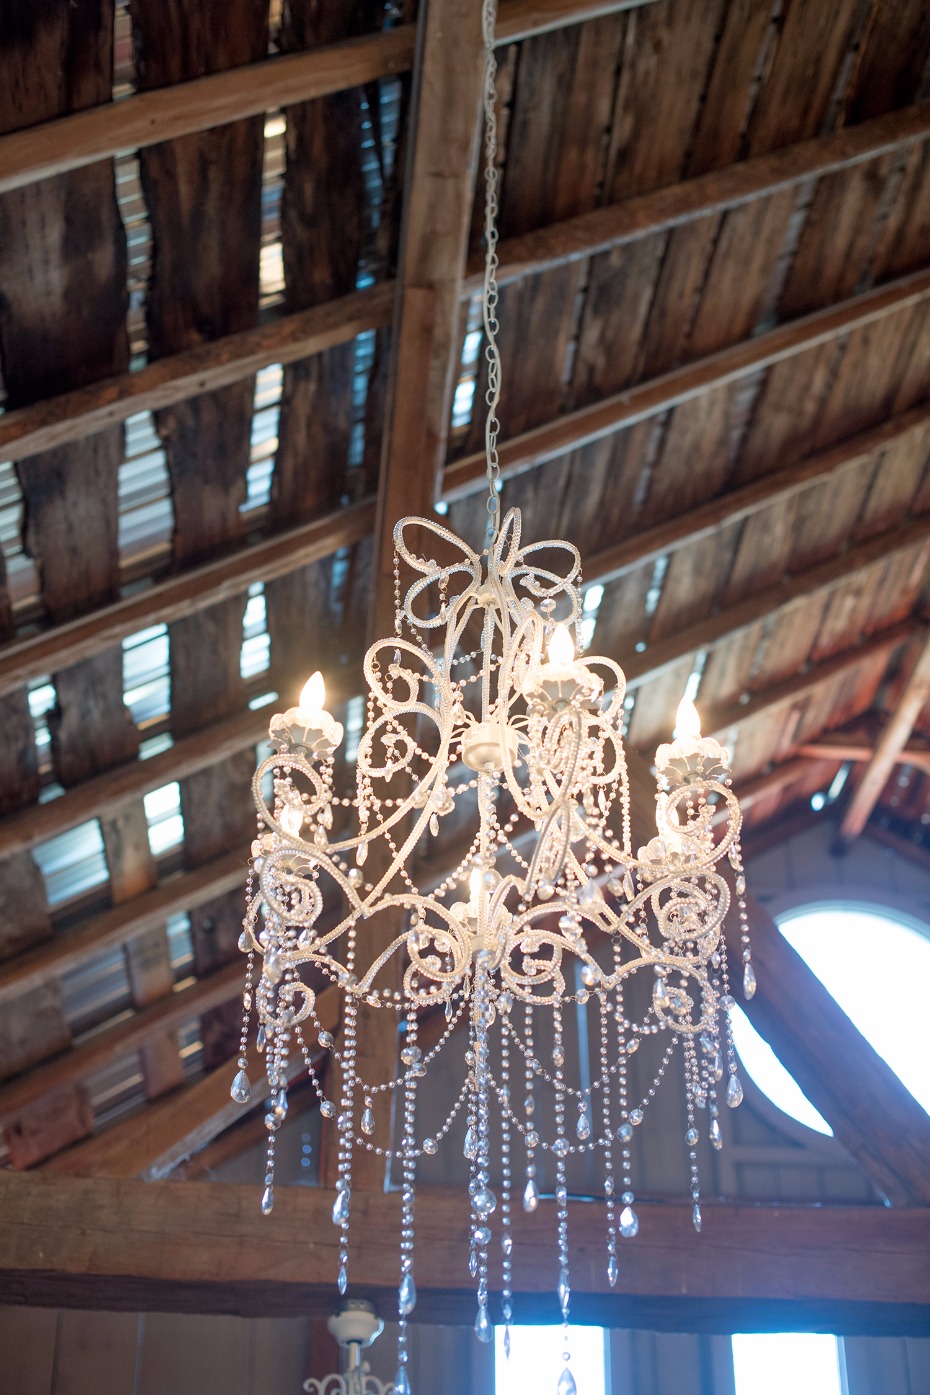 Gorgeous chandelier